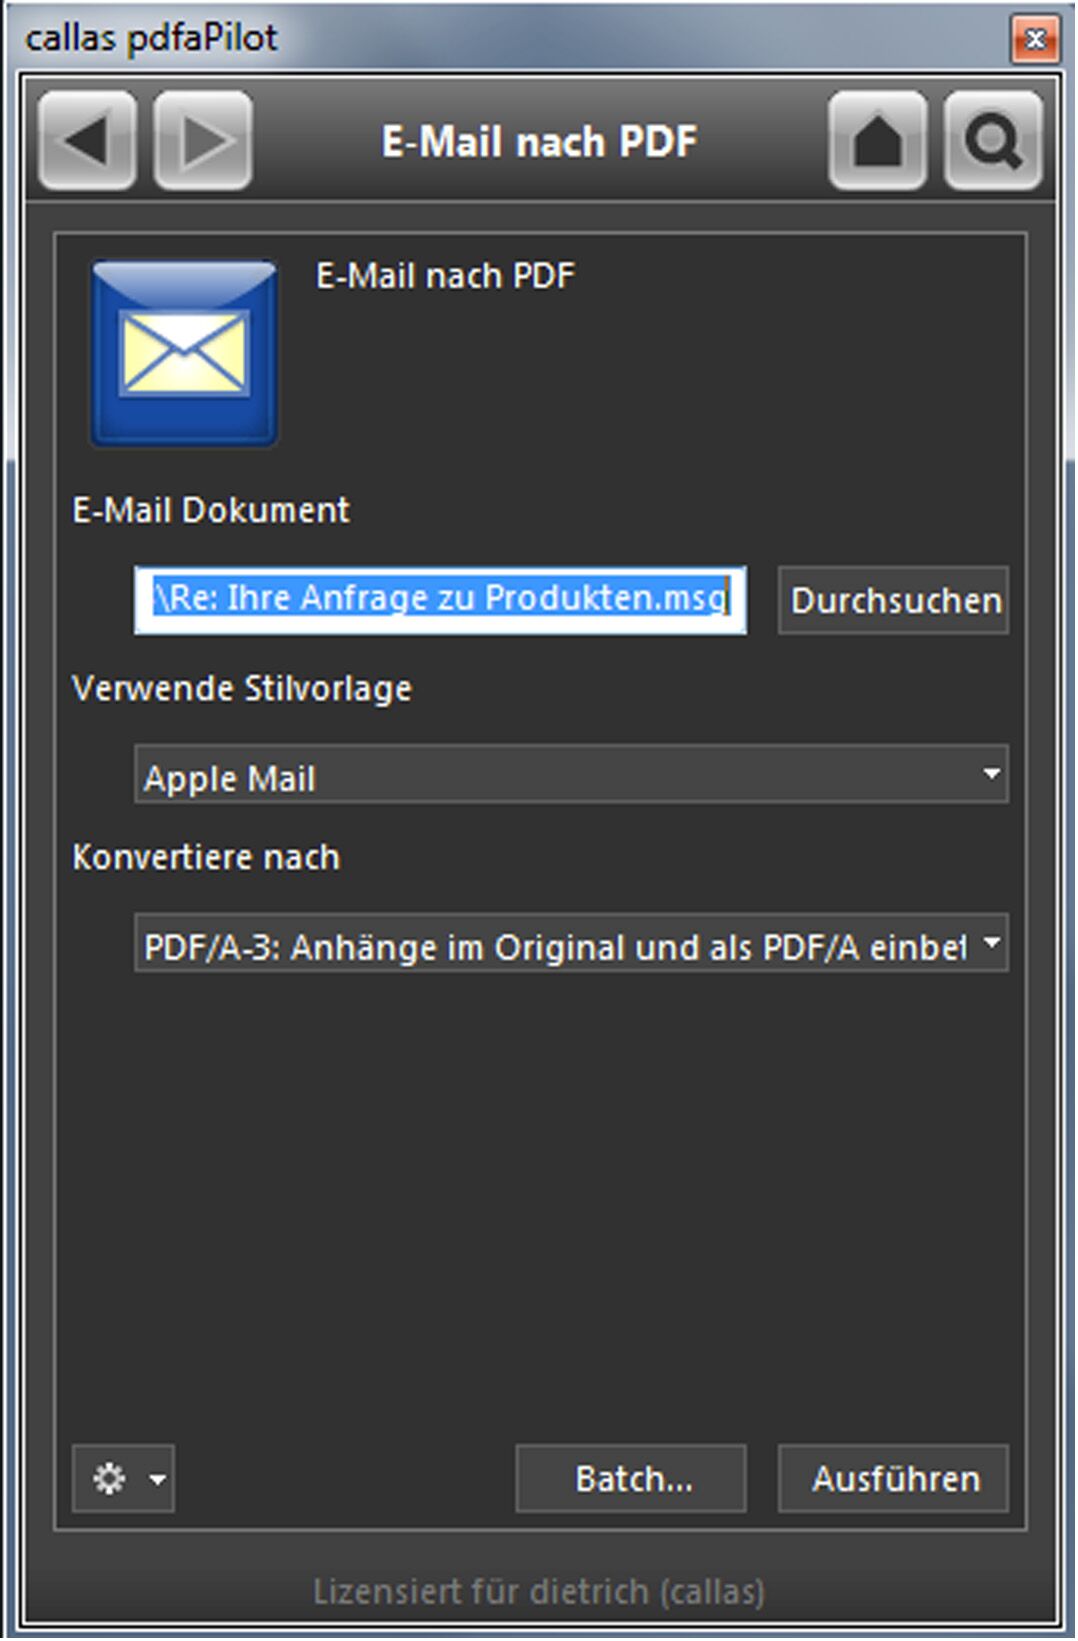 Bild callas software archiviert E-Mails mit PDF/A